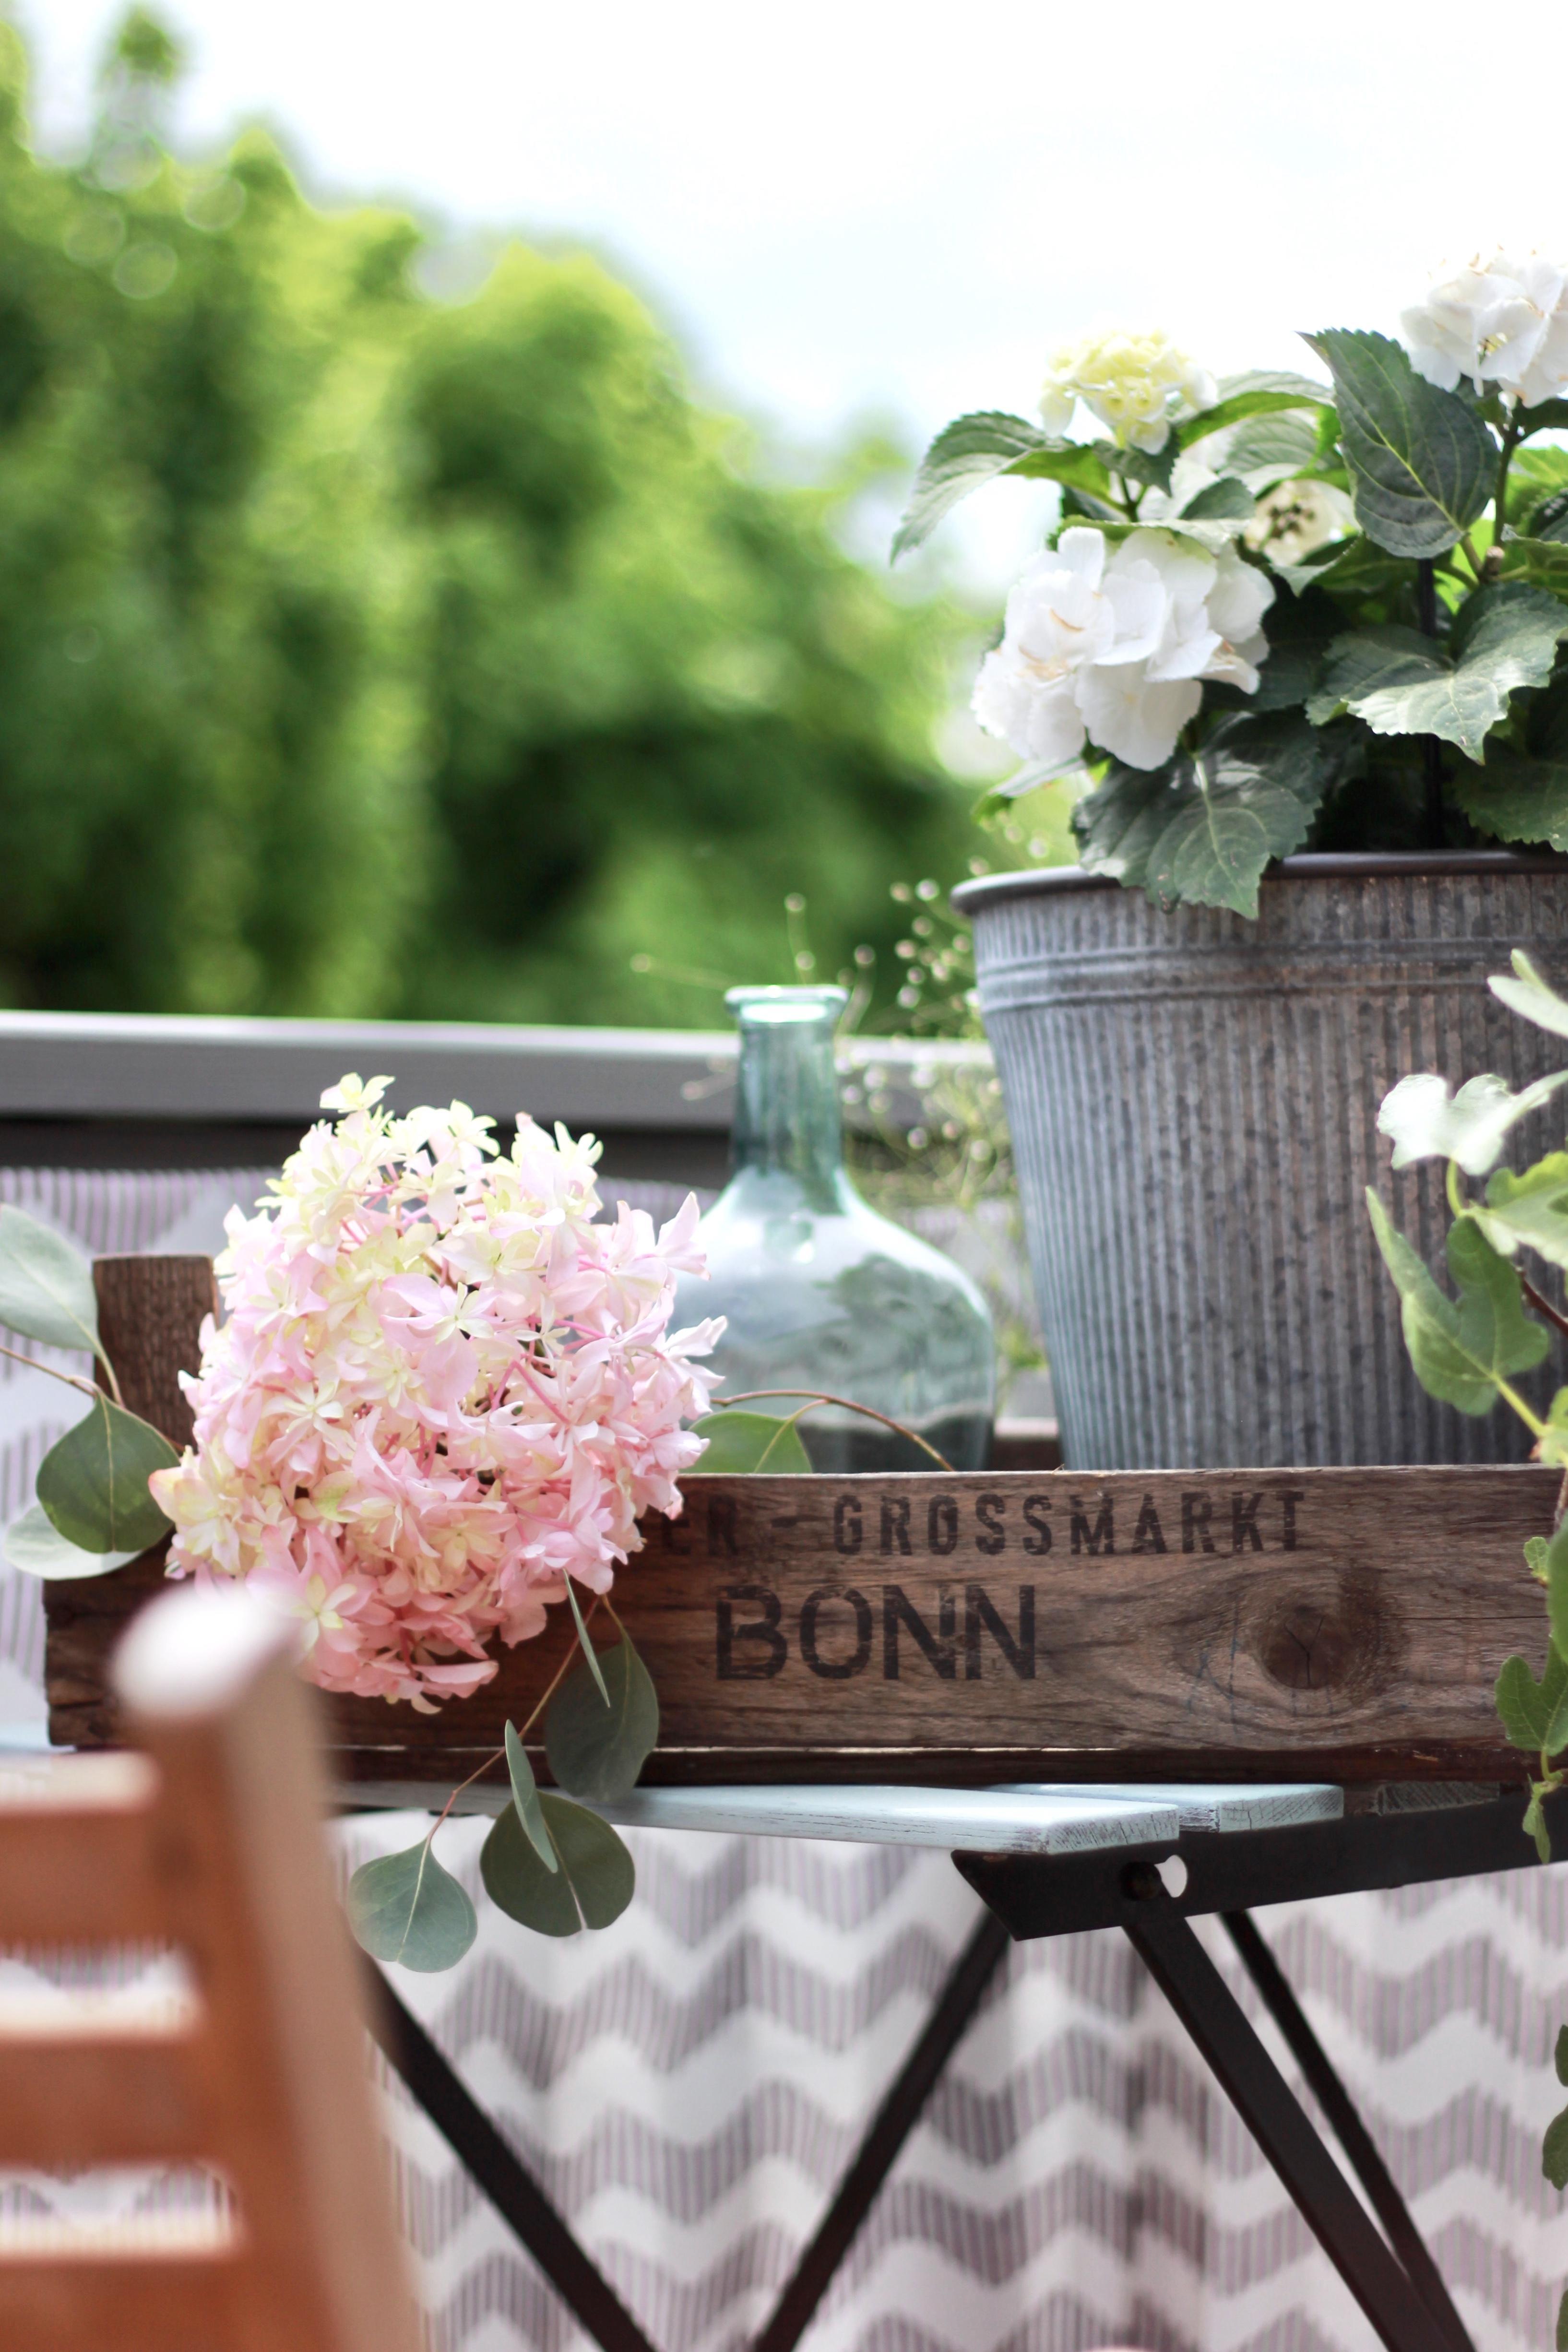 BALKONIEN
#living #outdoor #balkon #frühling #hortensien #vintage #shabby #romantic #blumen #grün #garten 